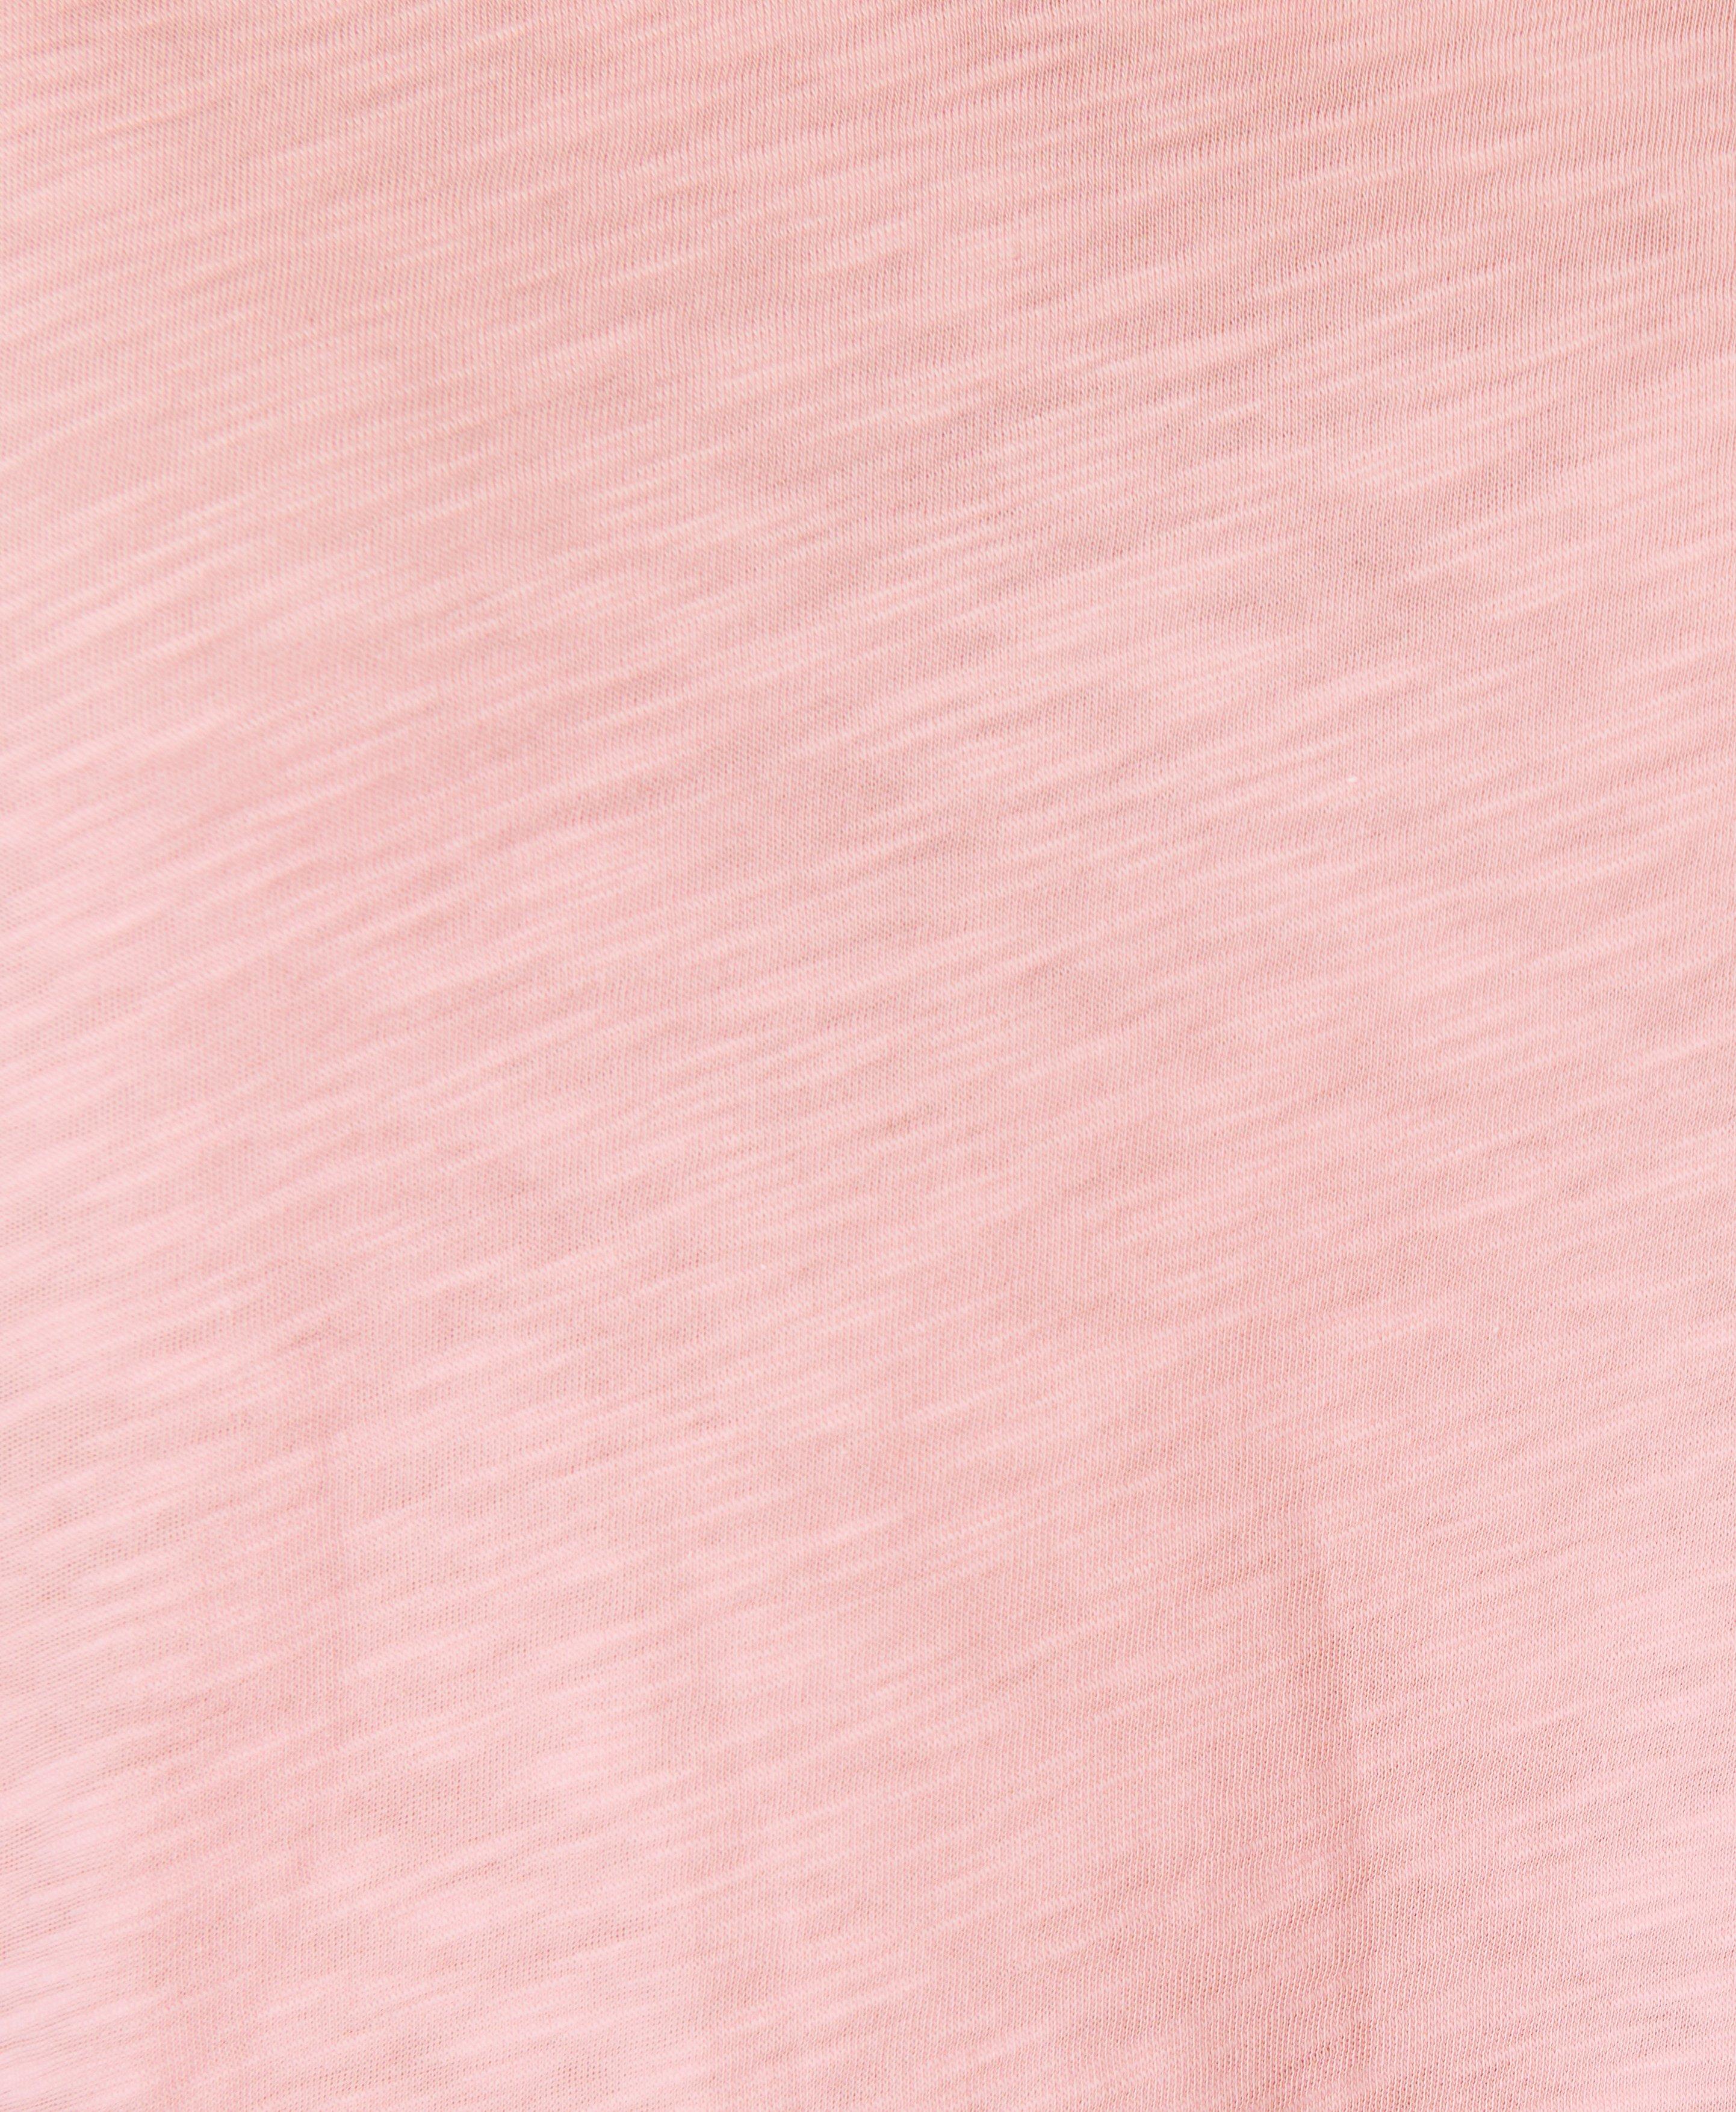 Refresh V-Neck Tee - Soft Pink, Women's T-Shirts